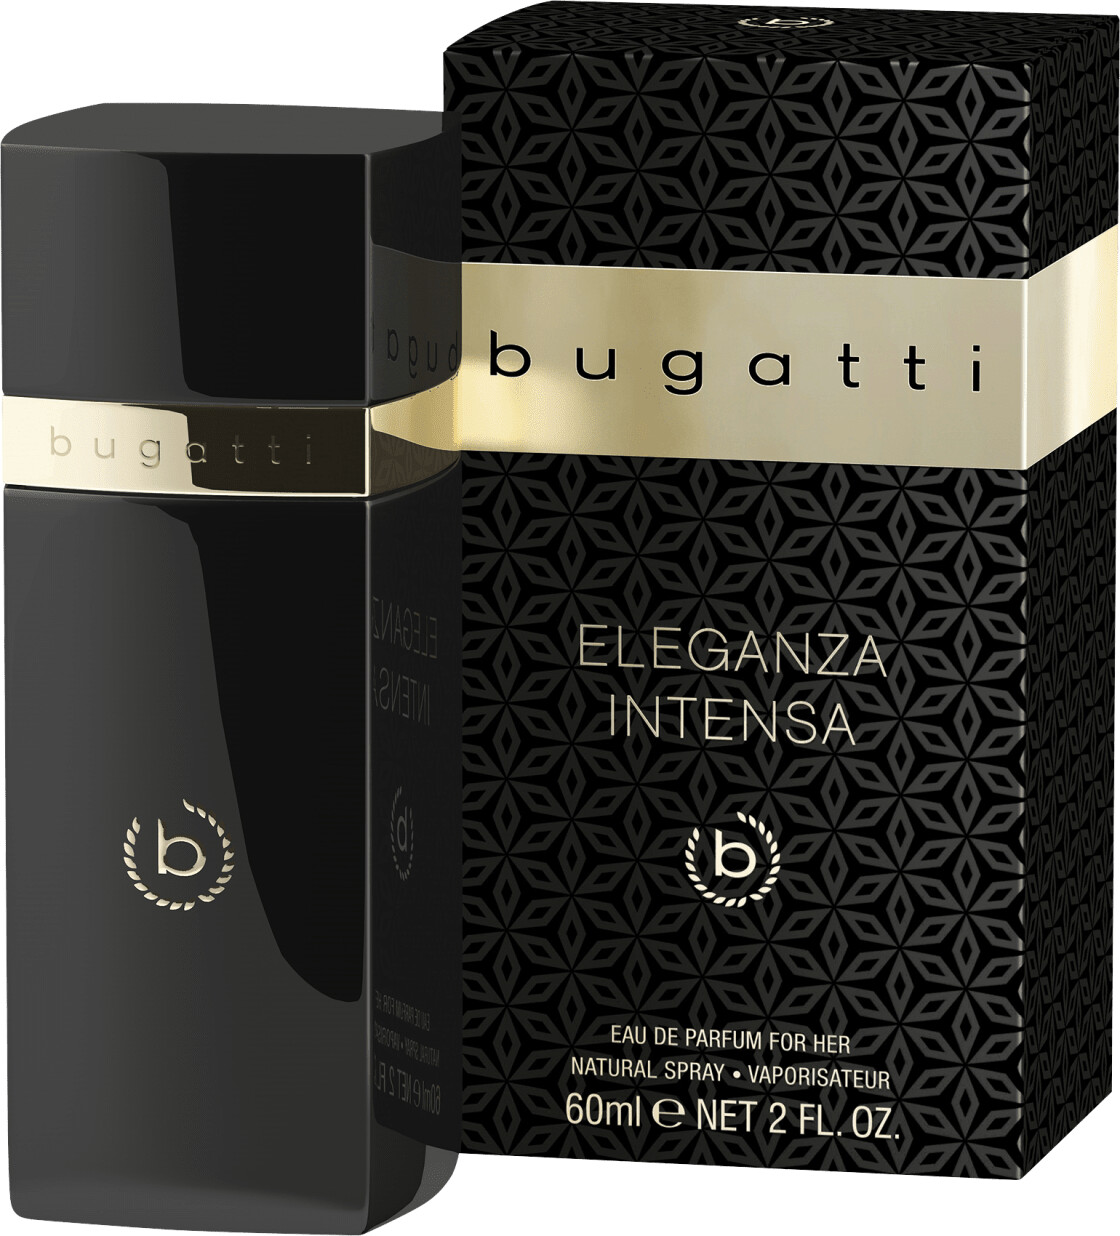 ab bei Intensa de | Preisvergleich Eau Bugatti Eleganza (60ml) Parfum 17,95 €